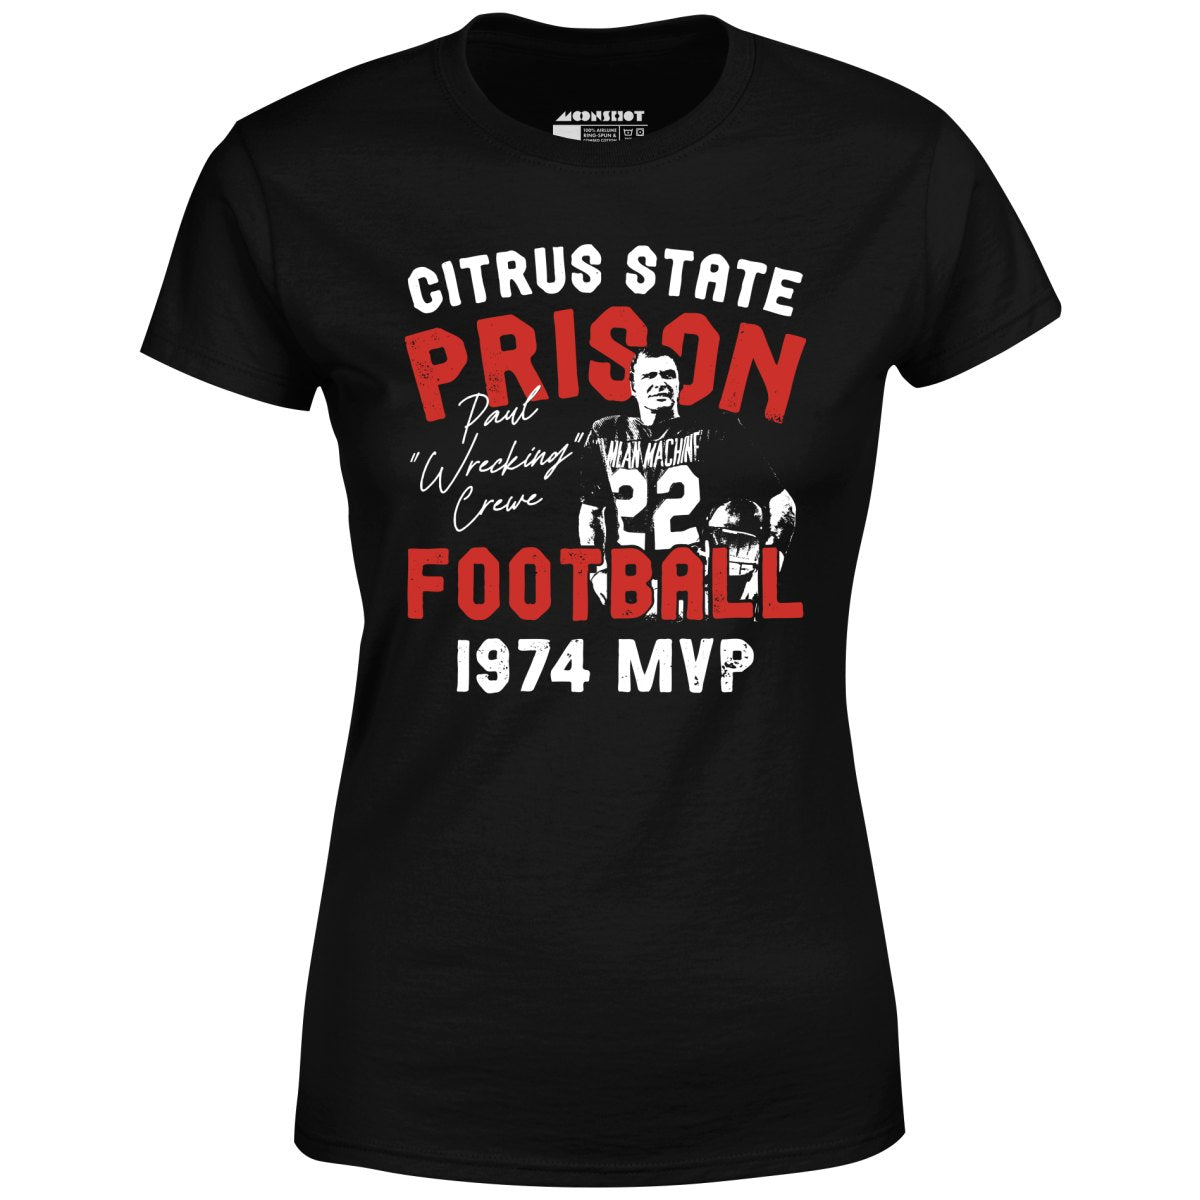 Mean Machine Citrus State Prison Football - Women's T-Shirt